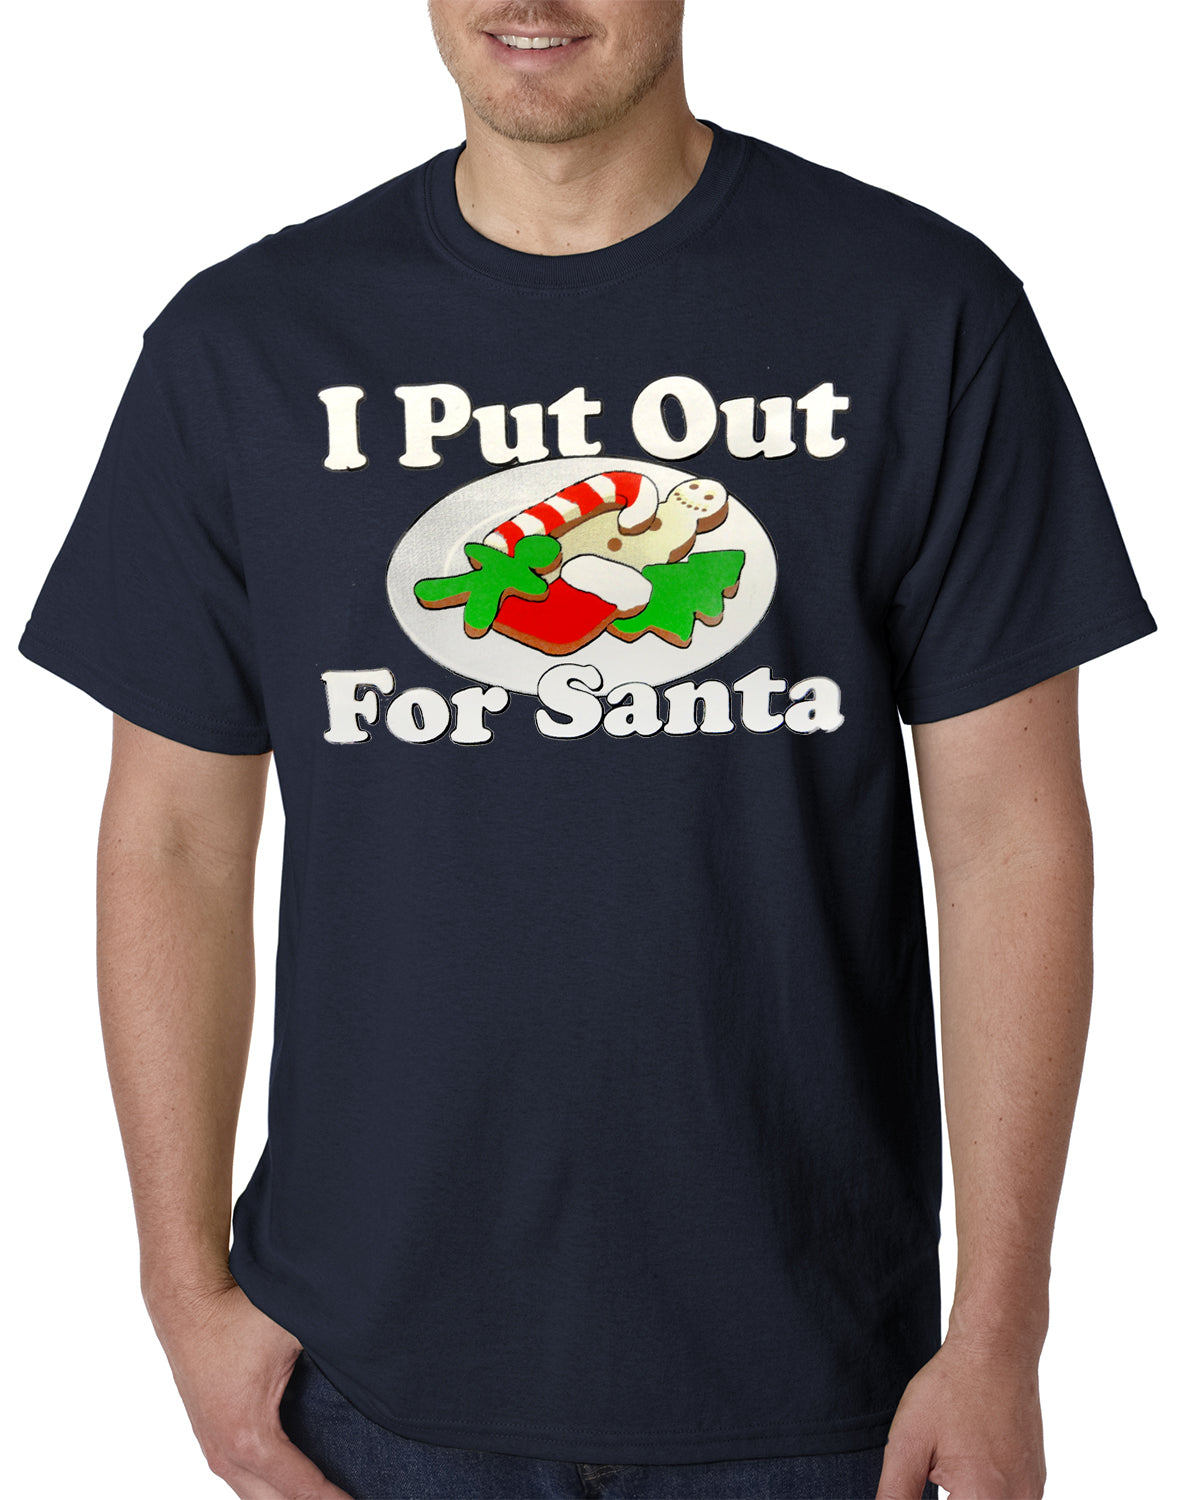 I Put Out For Santa Funny Mens T-shirt